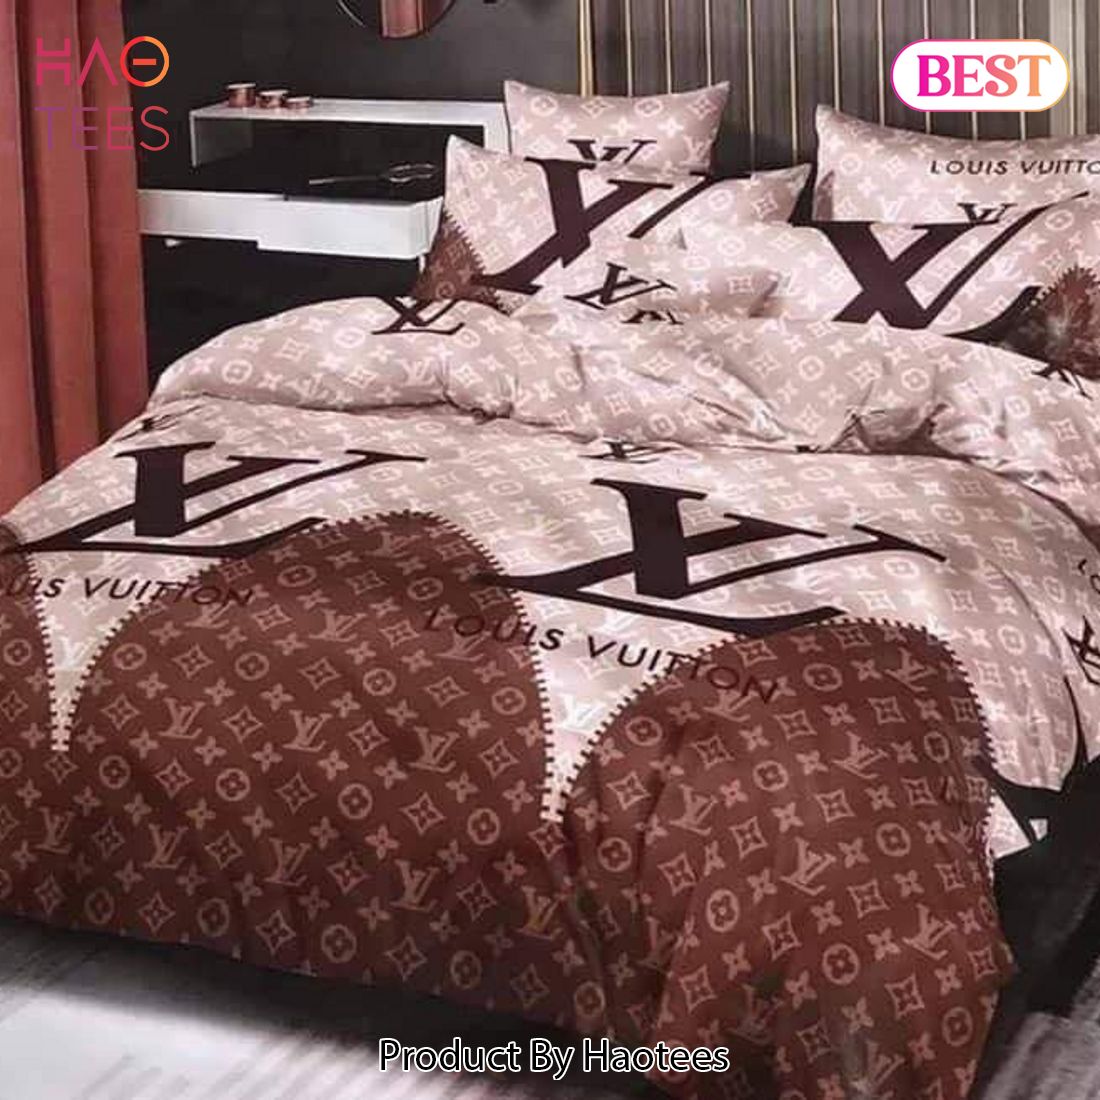 SALE] Louis Vuitton Brown Pinky Luxury Brand Bedding Set Home Decor